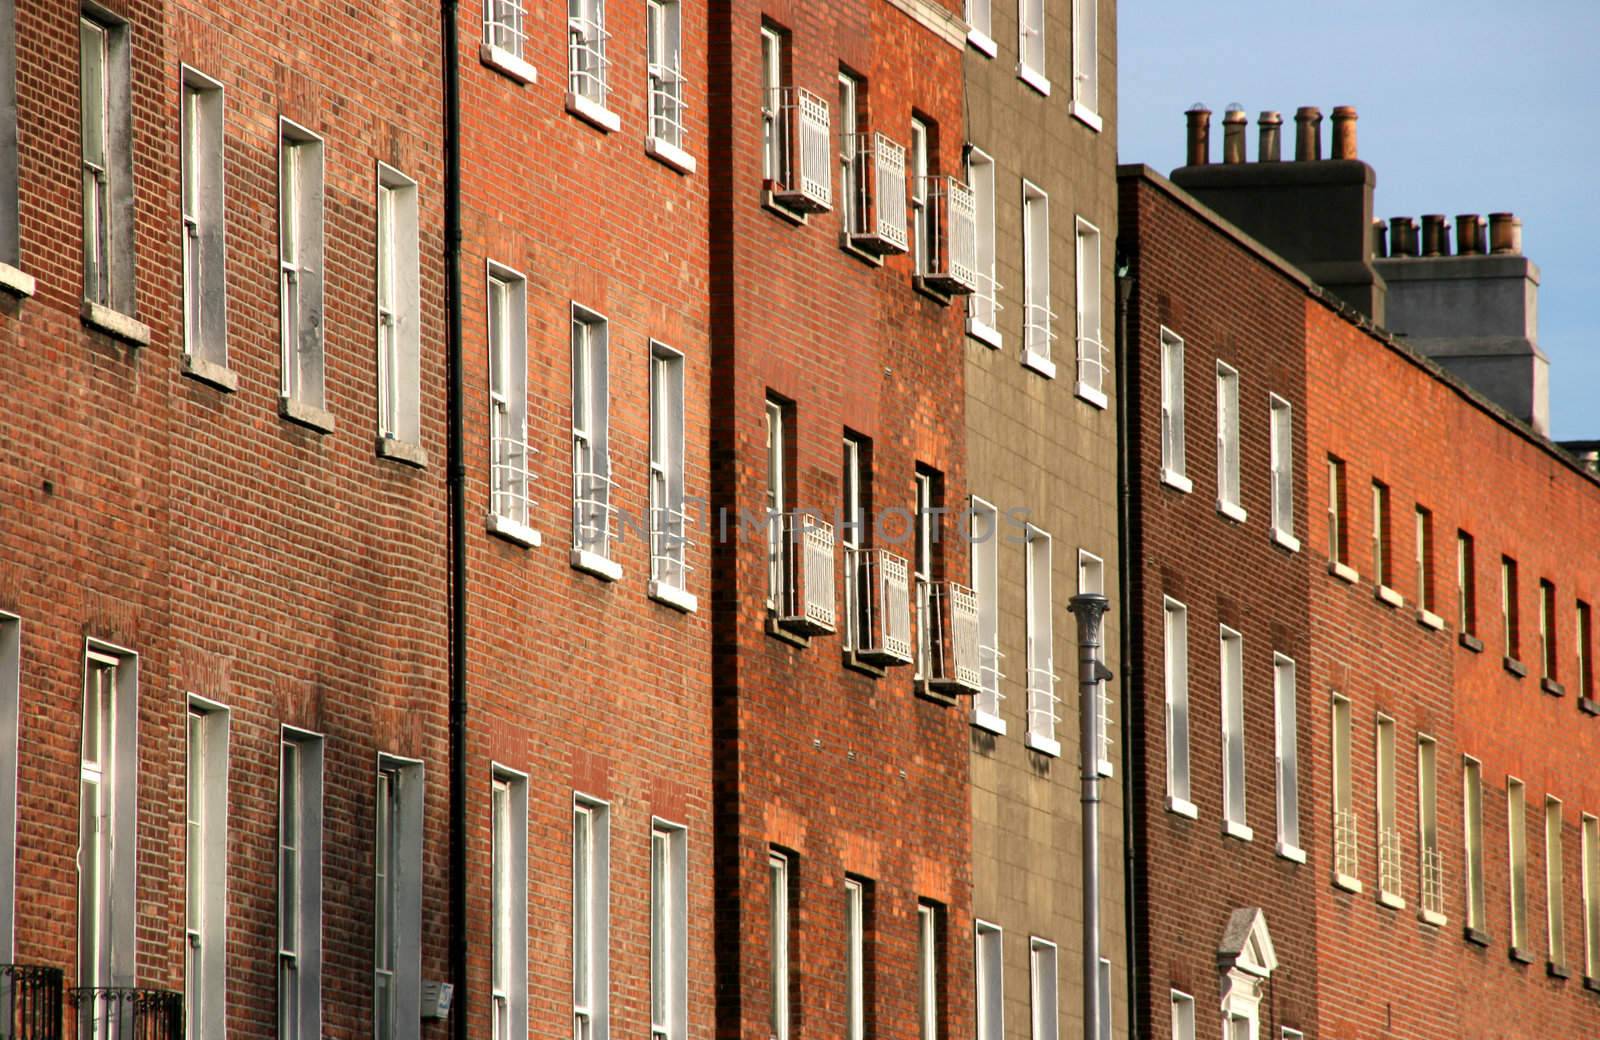 Rows of brick buildings in Dublin, Ireland.